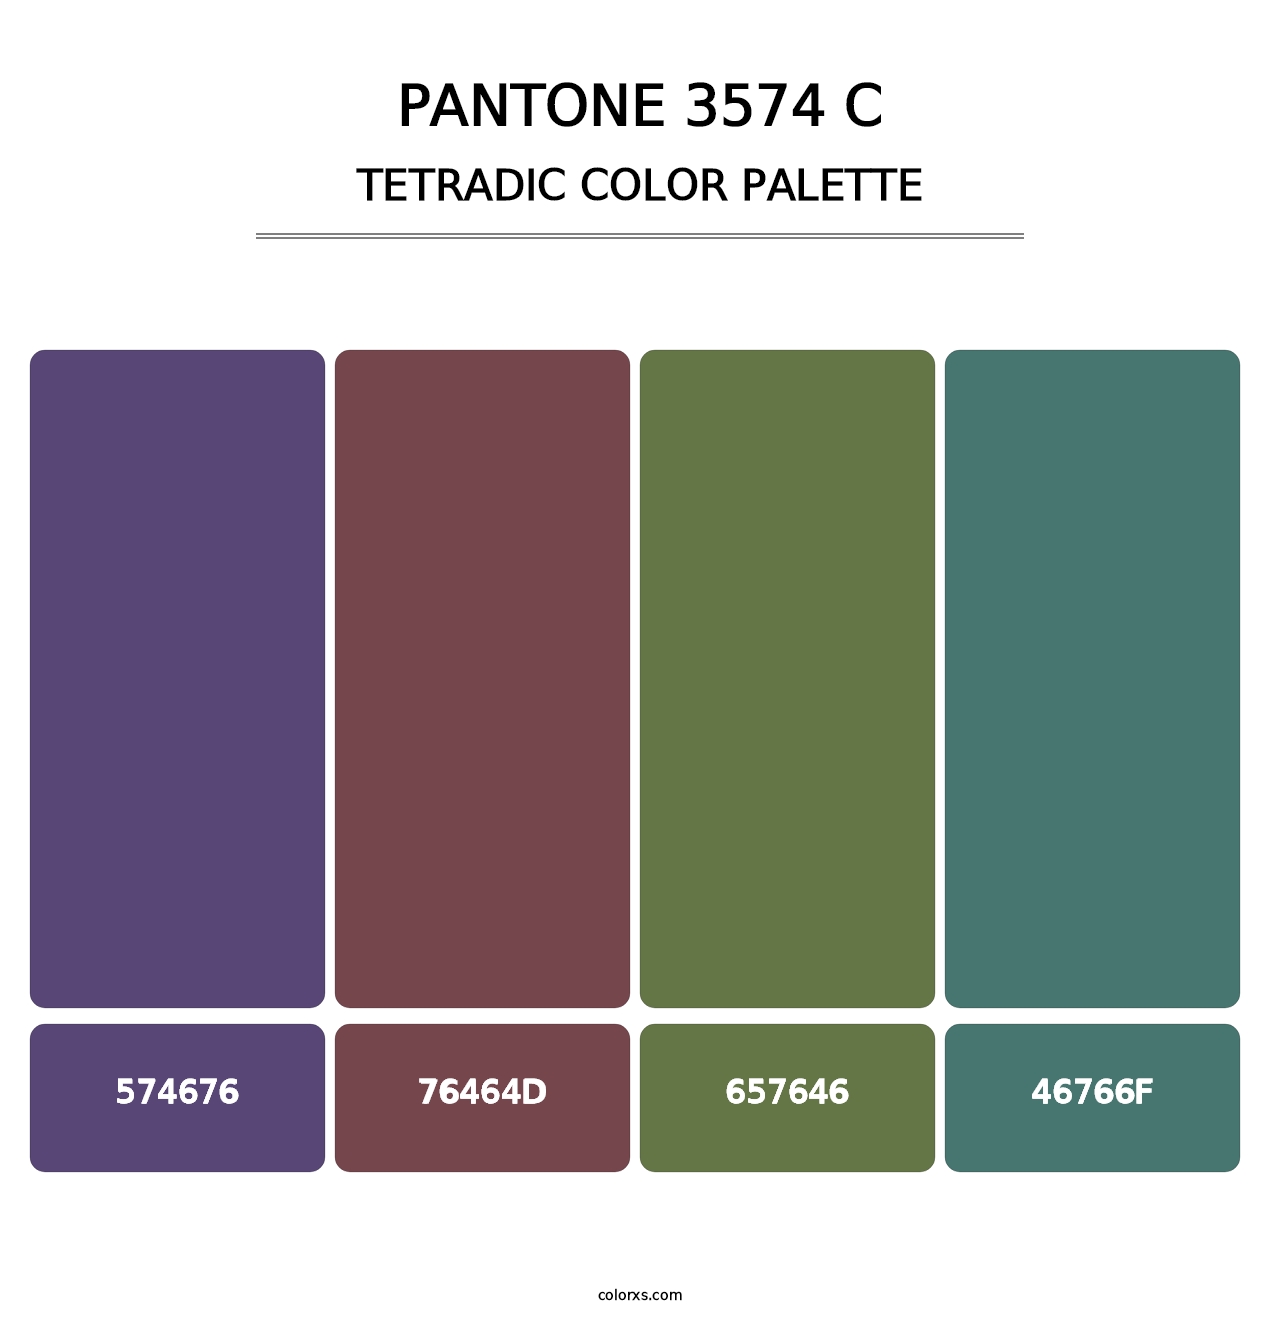 PANTONE 3574 C - Tetradic Color Palette